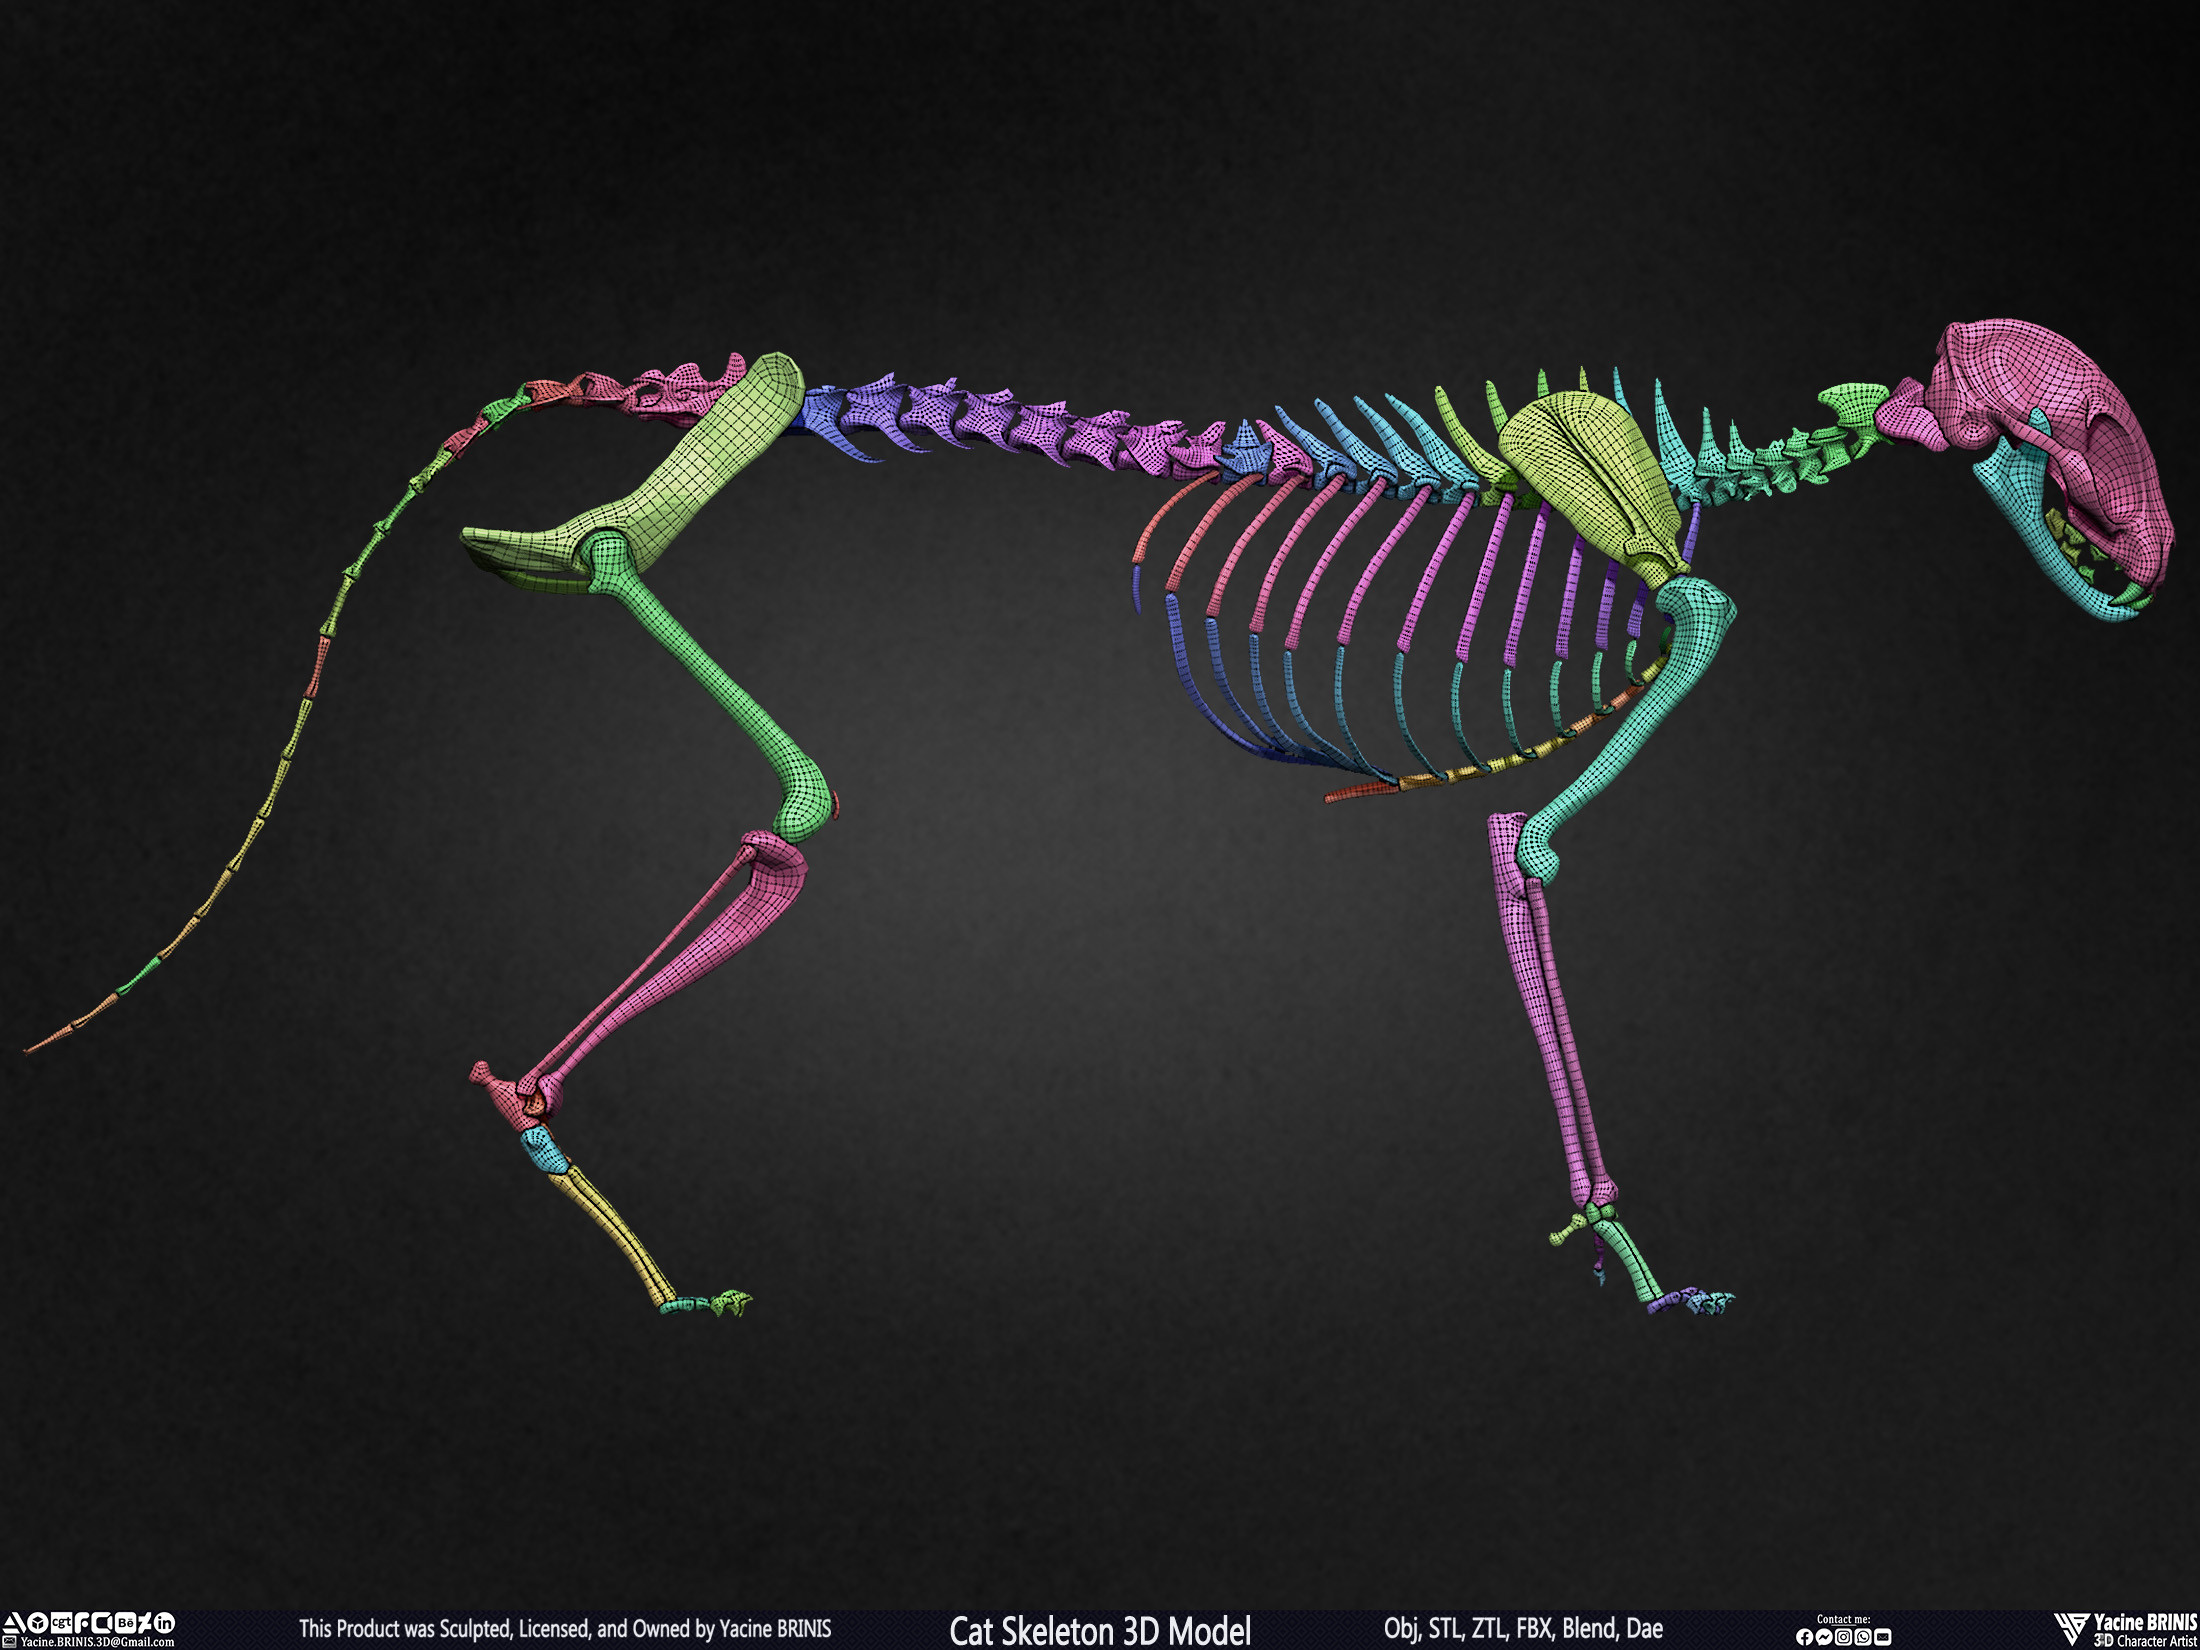 Highly Detailed Cat Skeleton 3D Model Sculpted by Yacine BRINIS Set 039